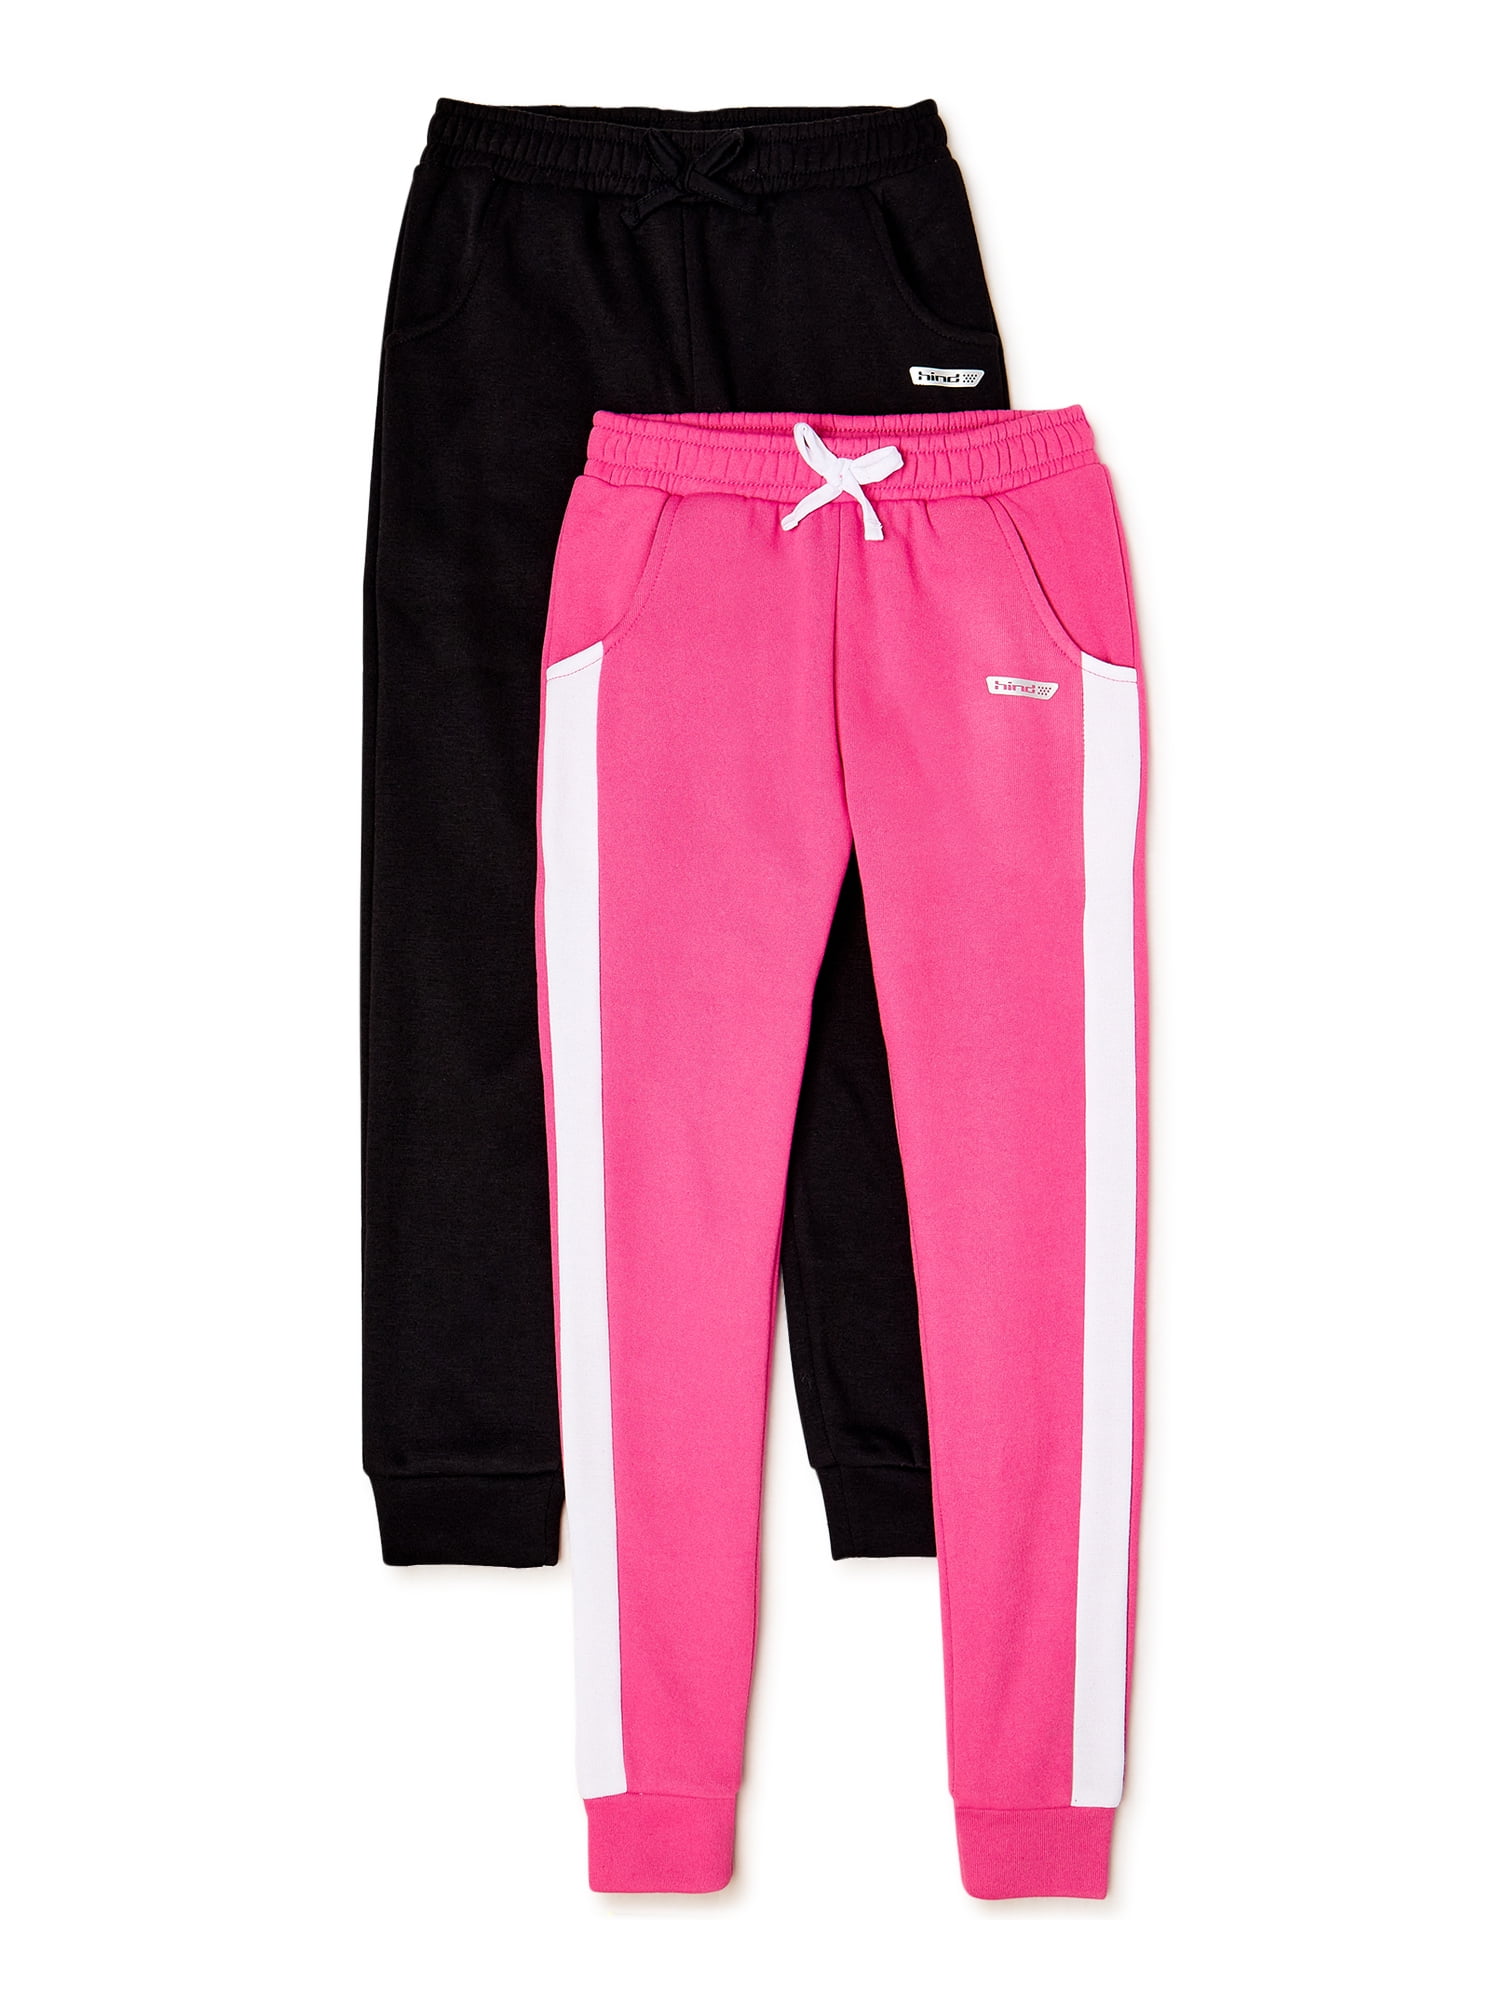 Adidas Track Pants Youth Girls Medium (12-14) Black Pint Active Soccer |  eBay